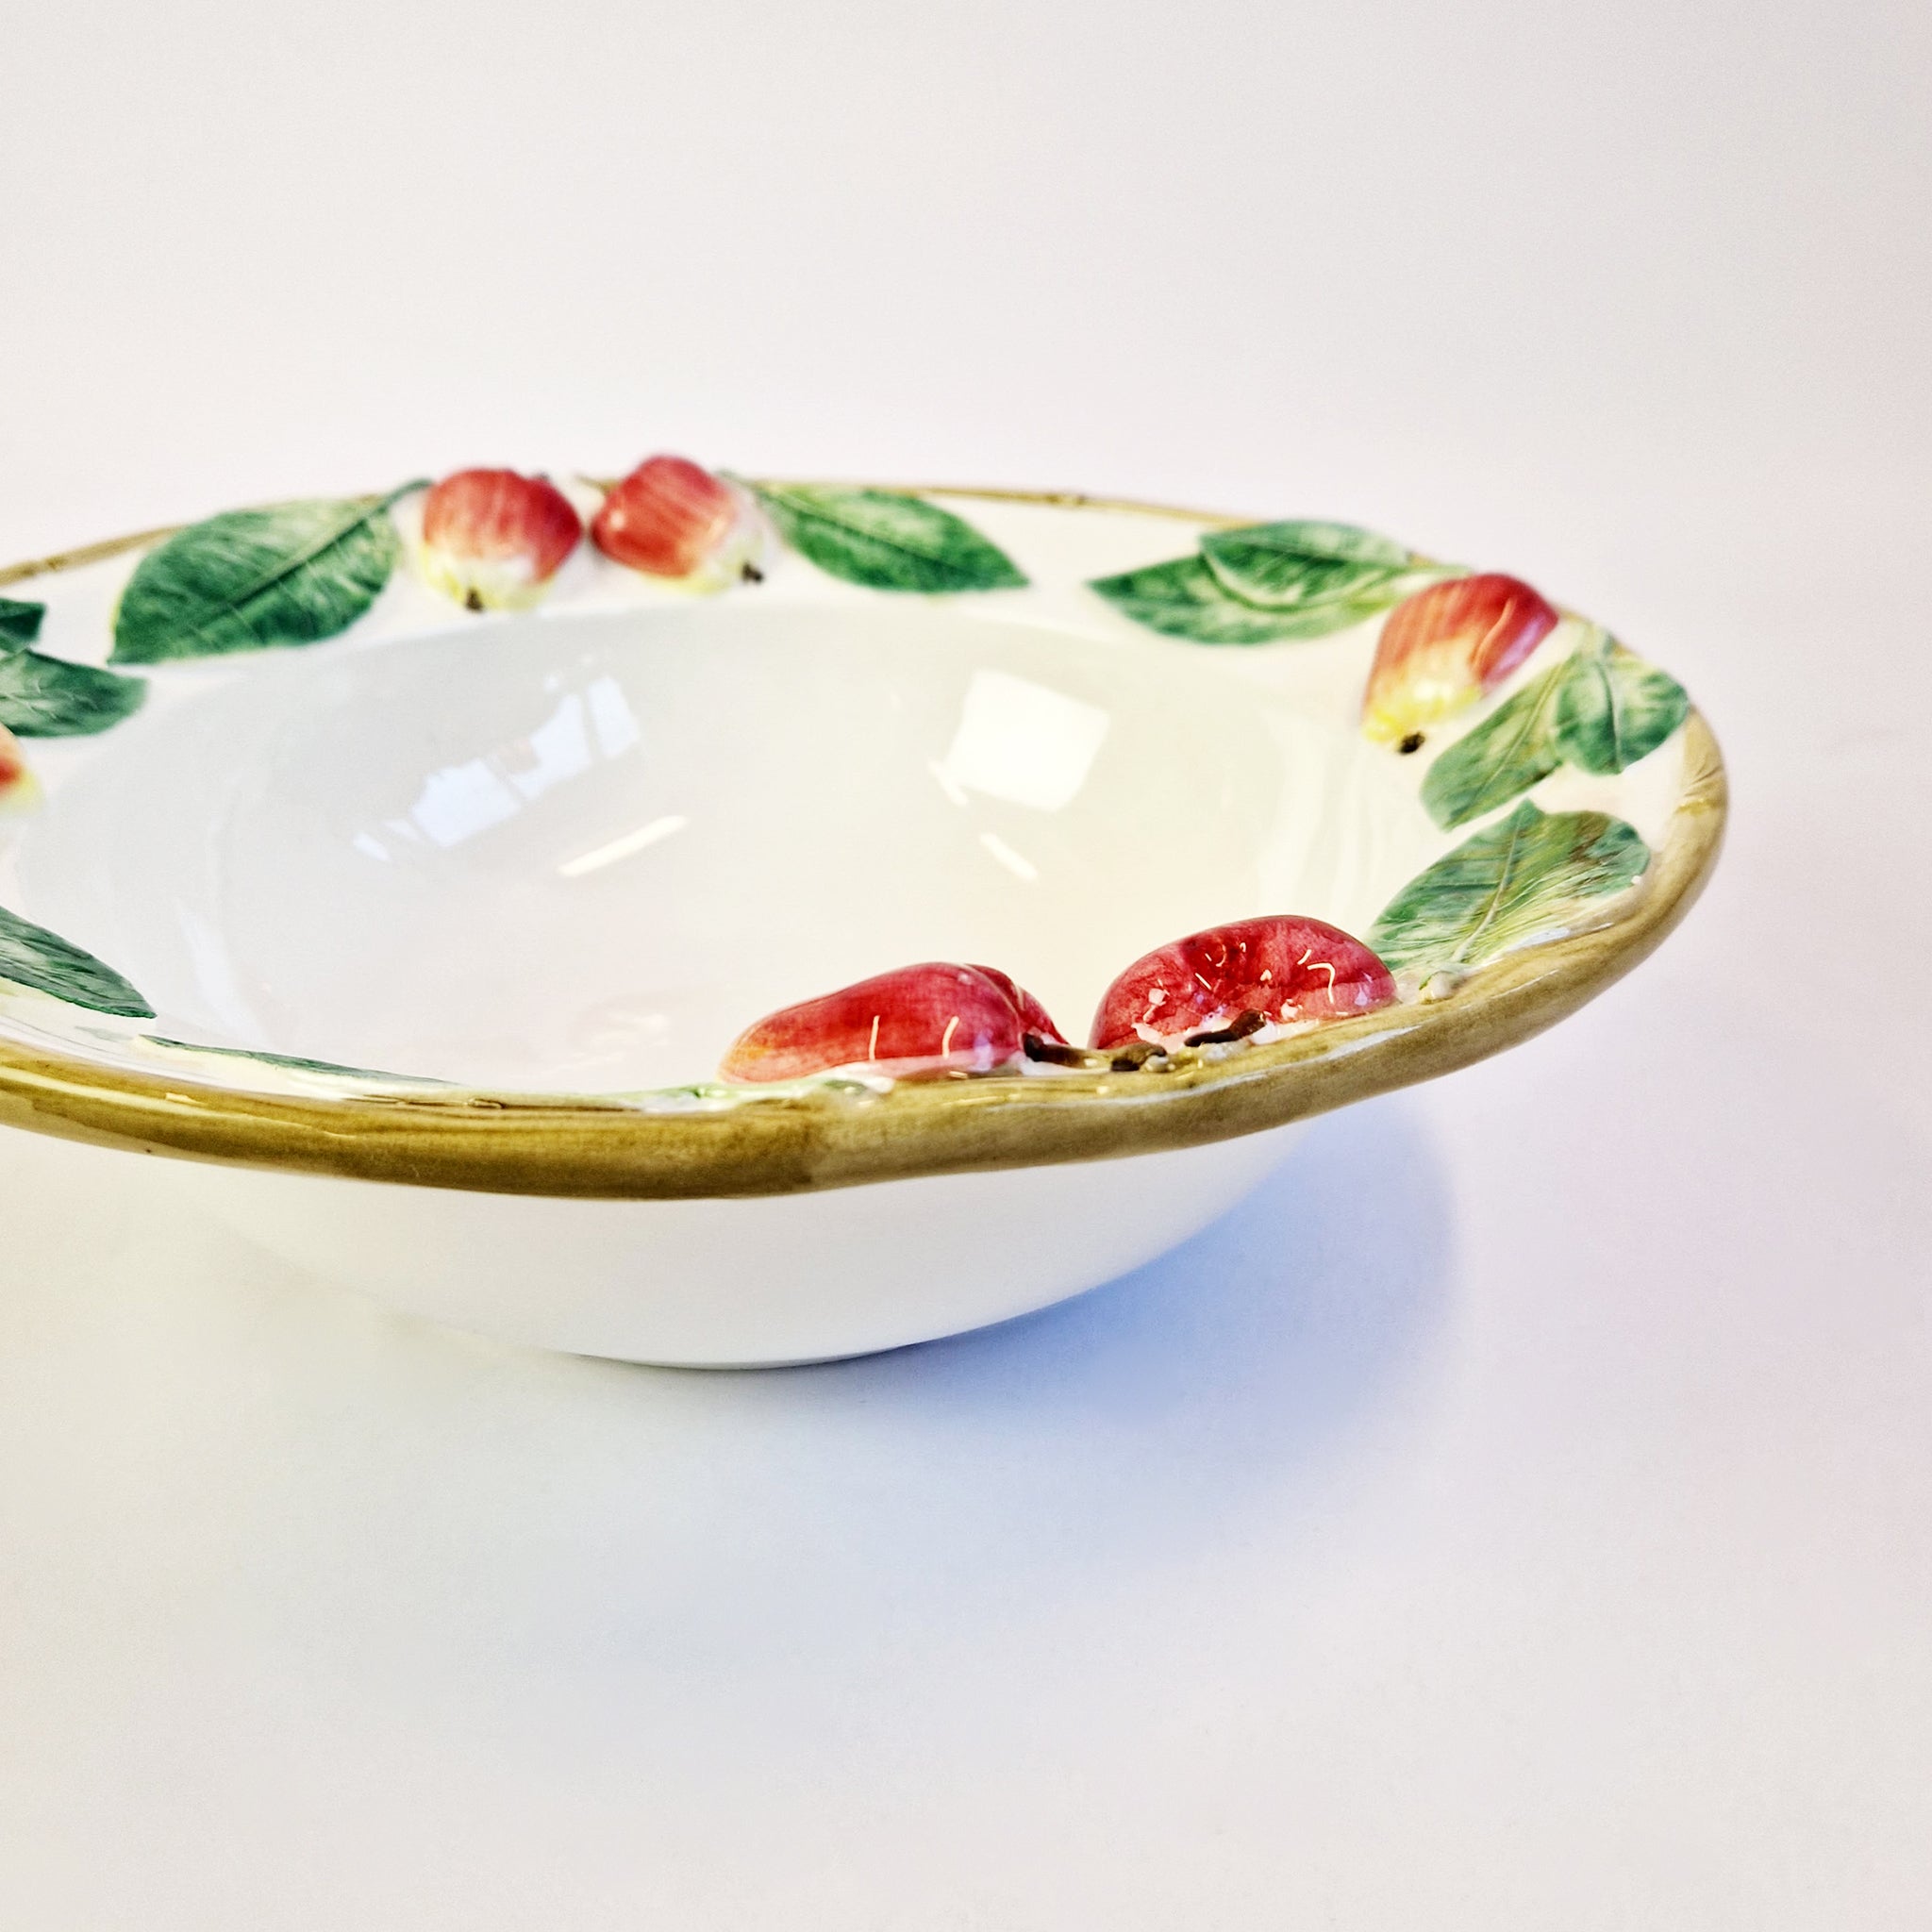 Large Italian ceramic bowl with apples